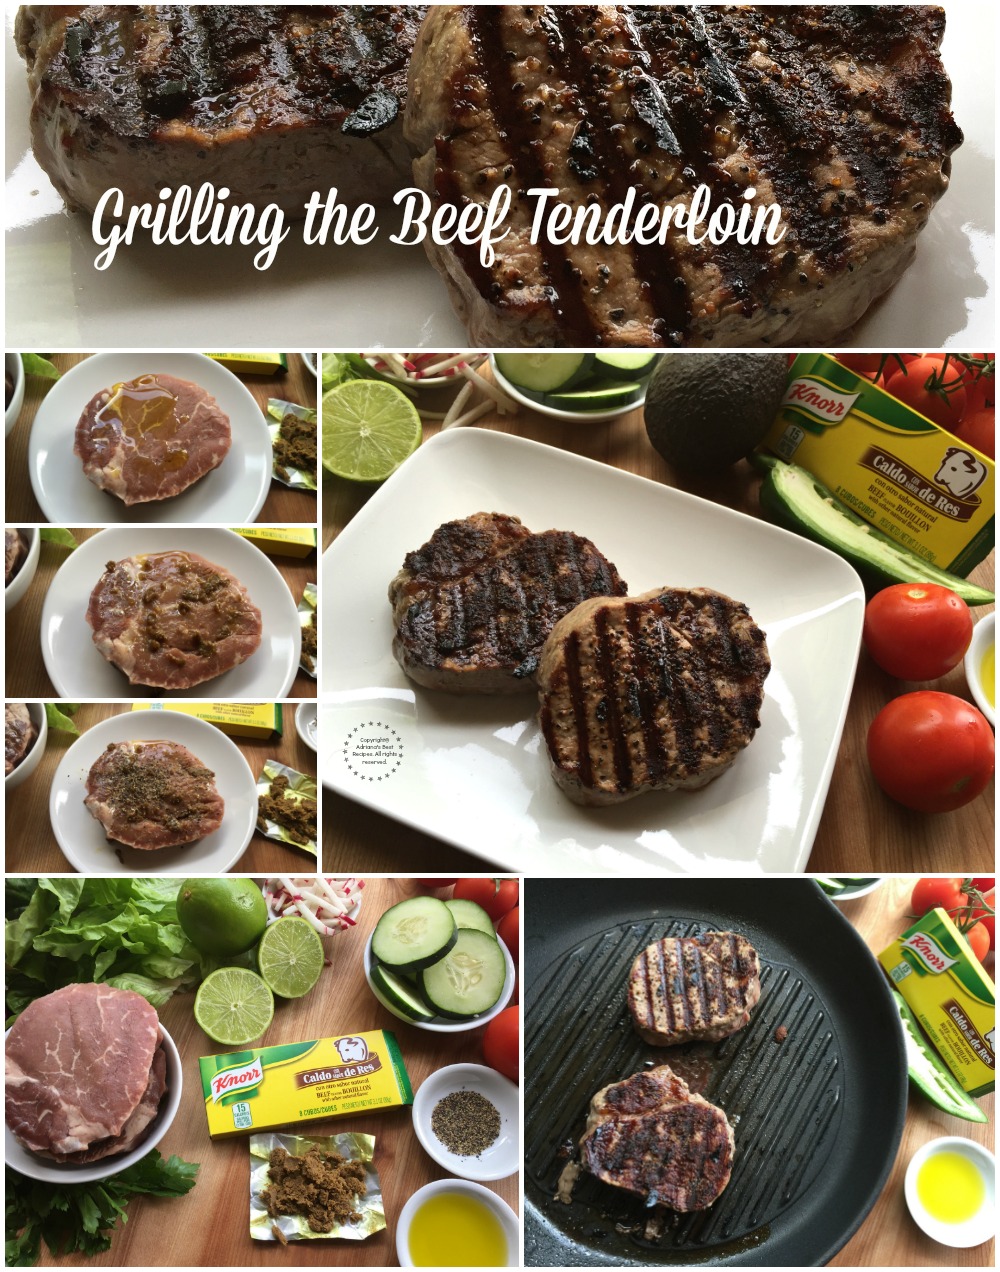 Grilling and Seasoning the Beef Tenderloin